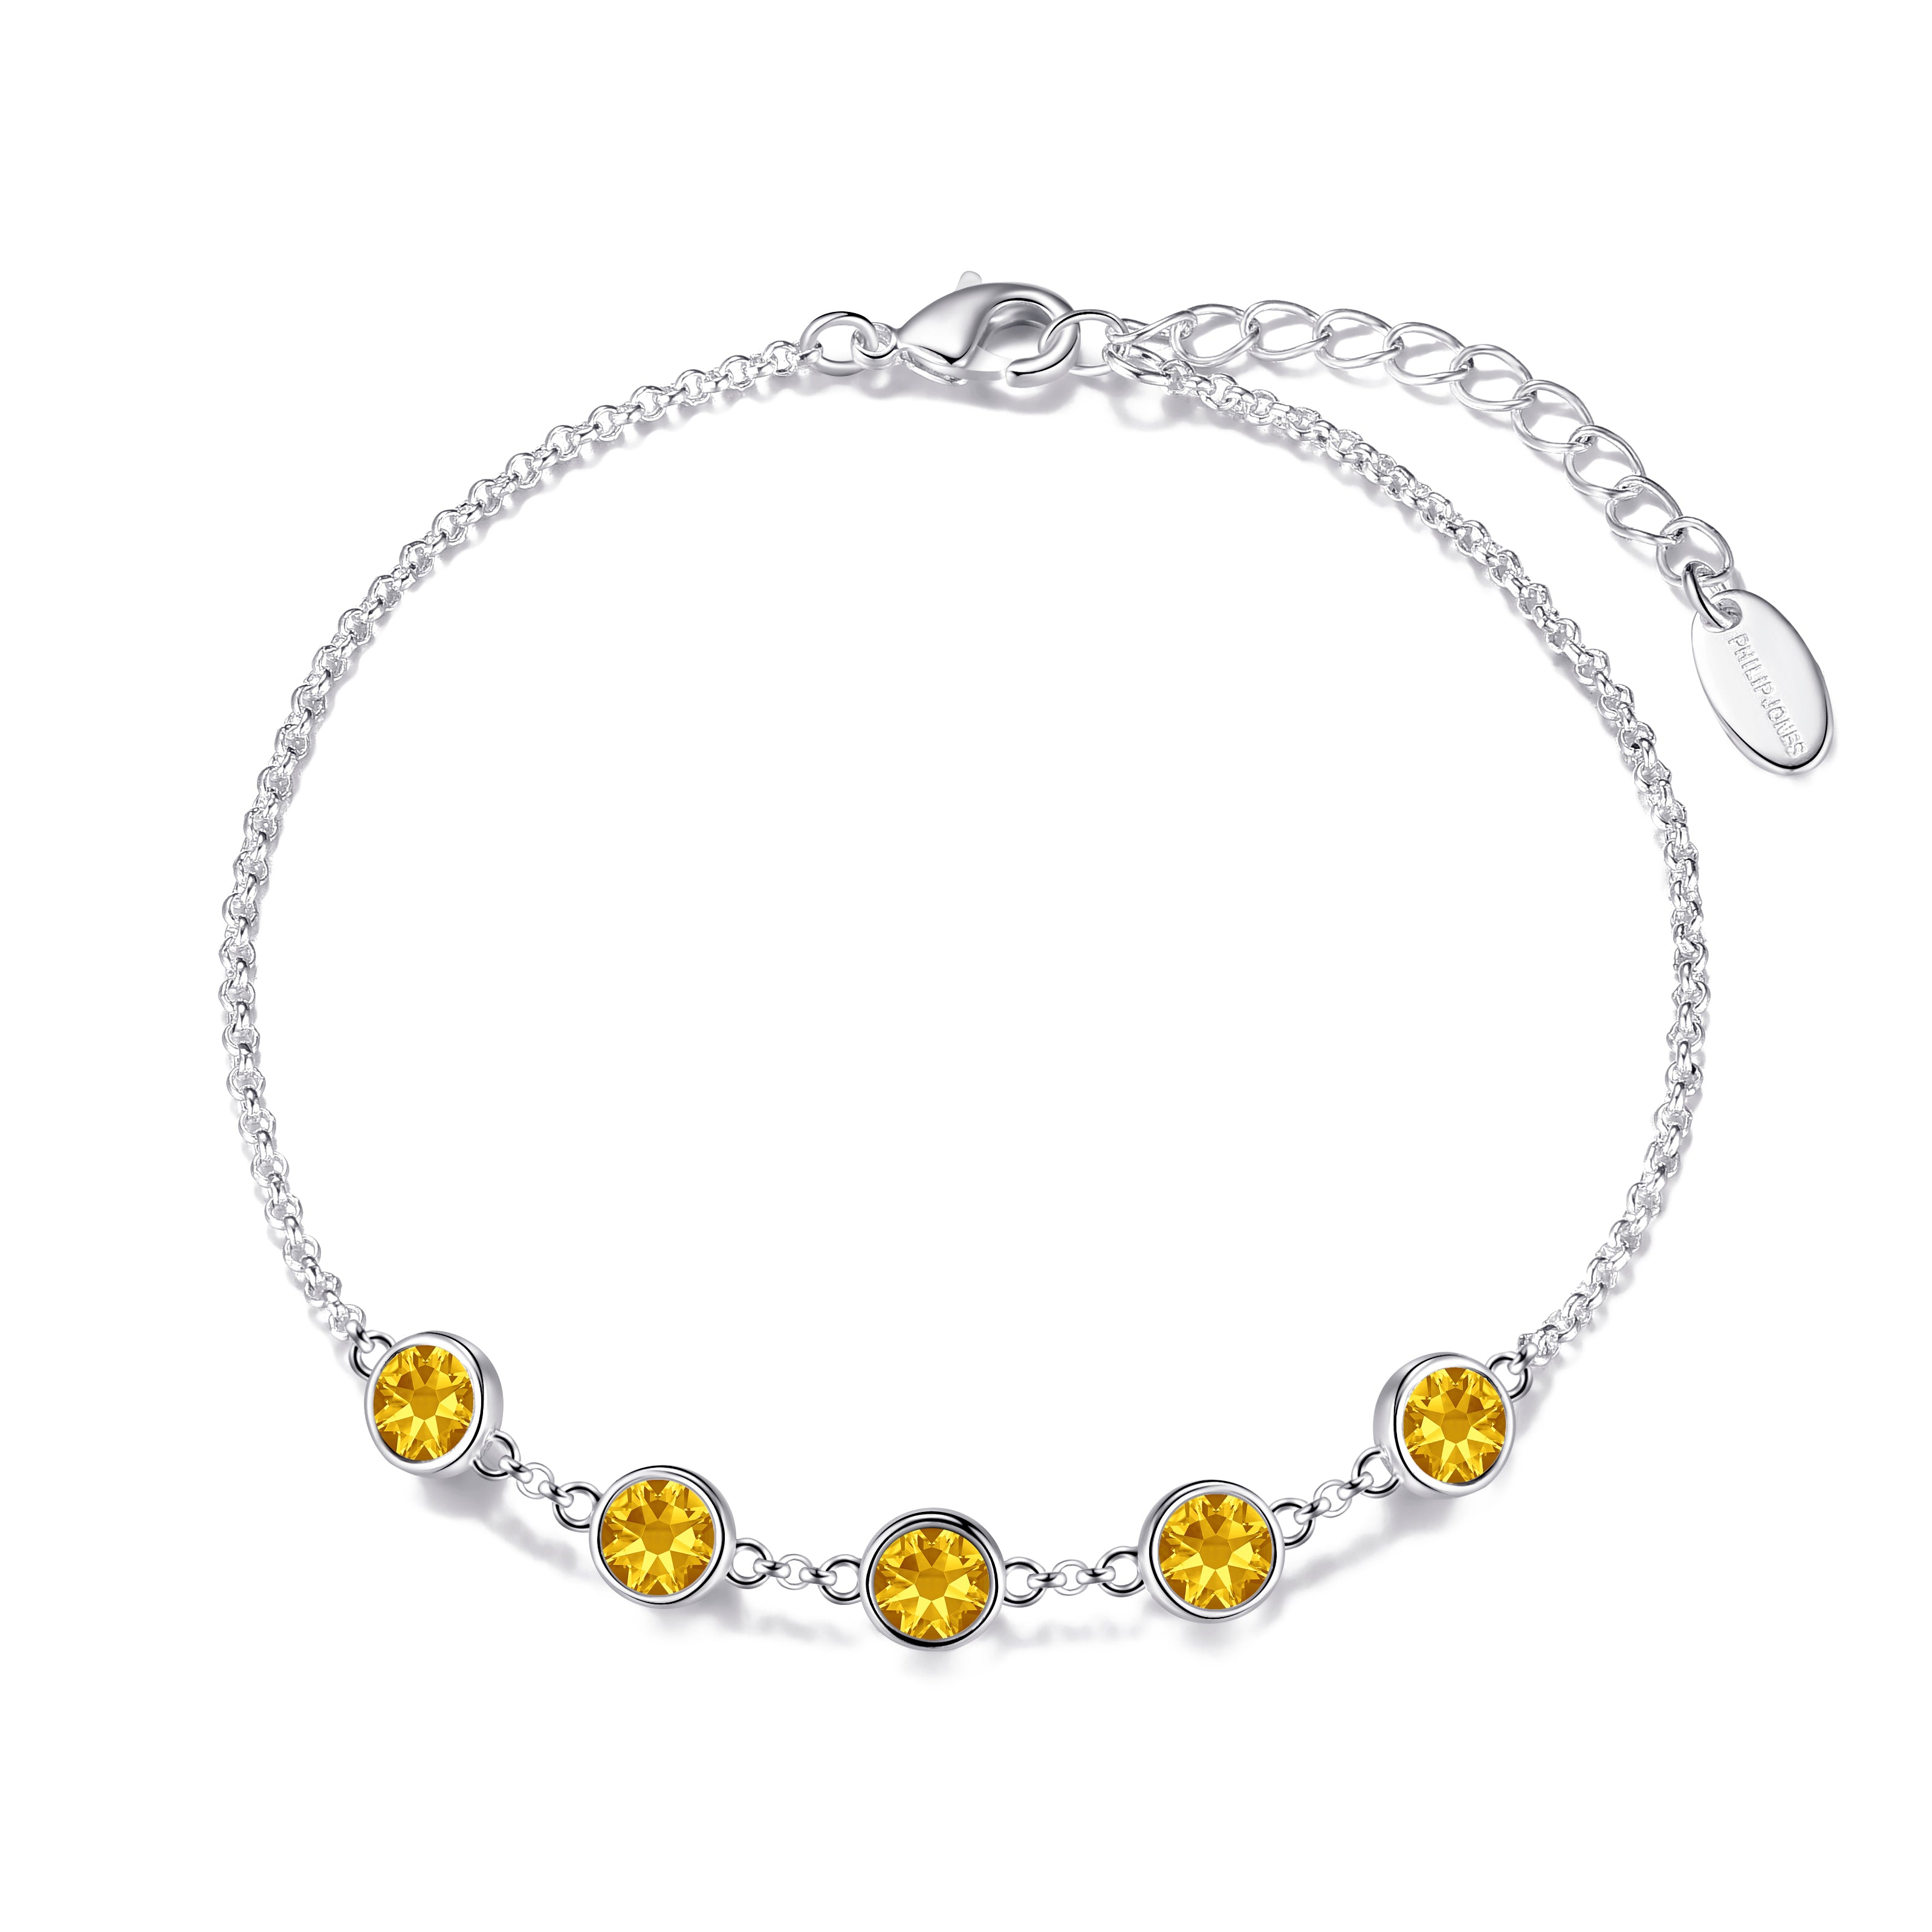 Yellow Crystal Chain Bracelet Created with Zircondia® Crystals by Philip Jones Jewellery